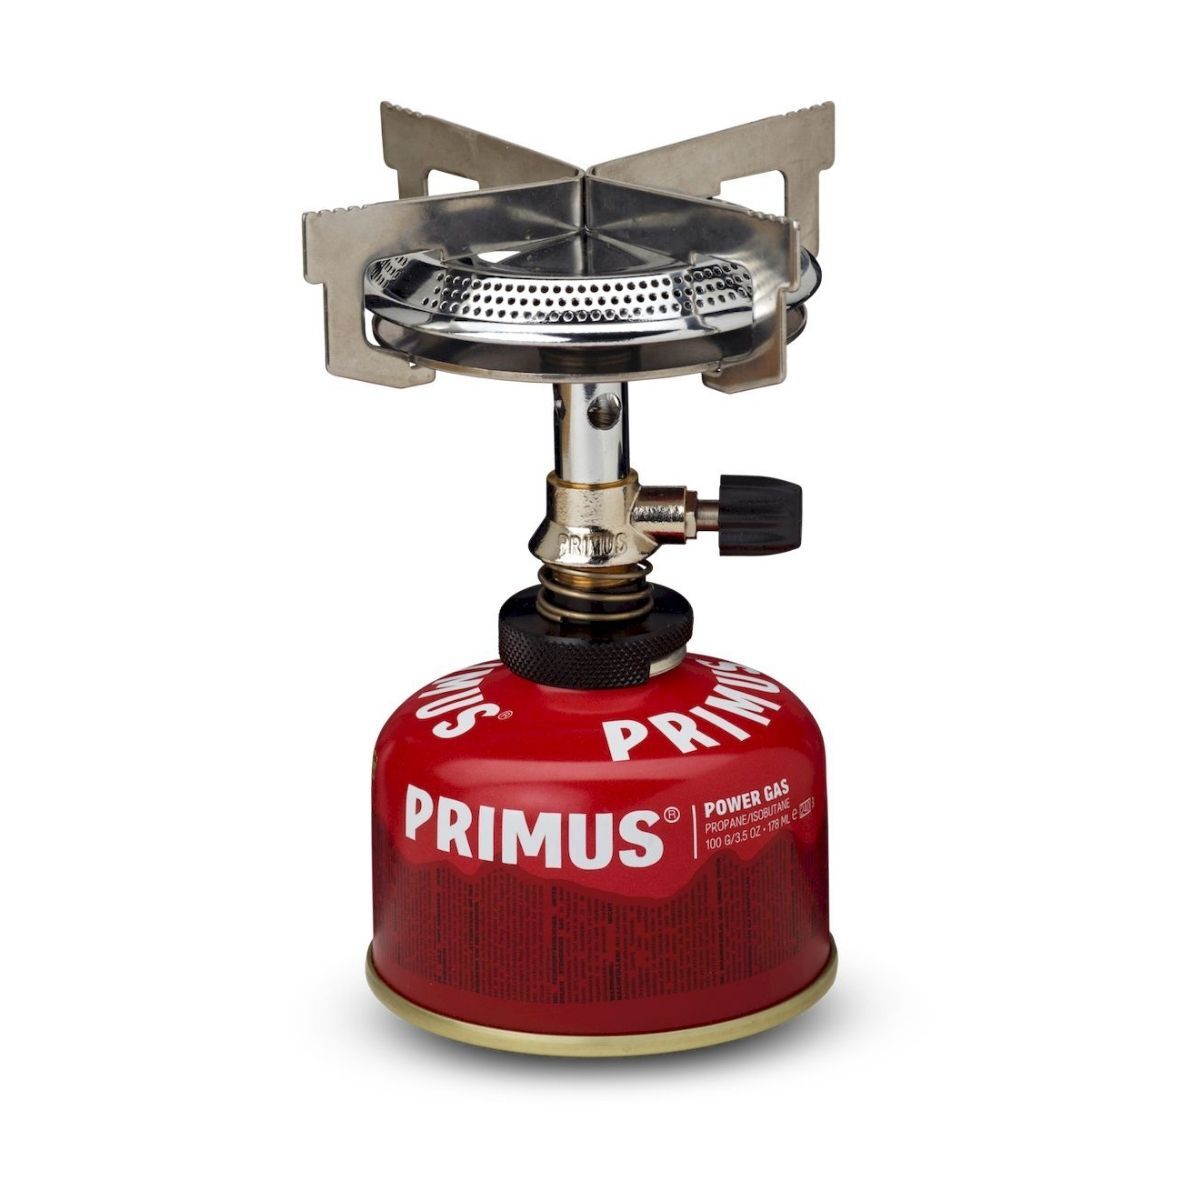 Primus Mimer Duo Stove - Gas stove